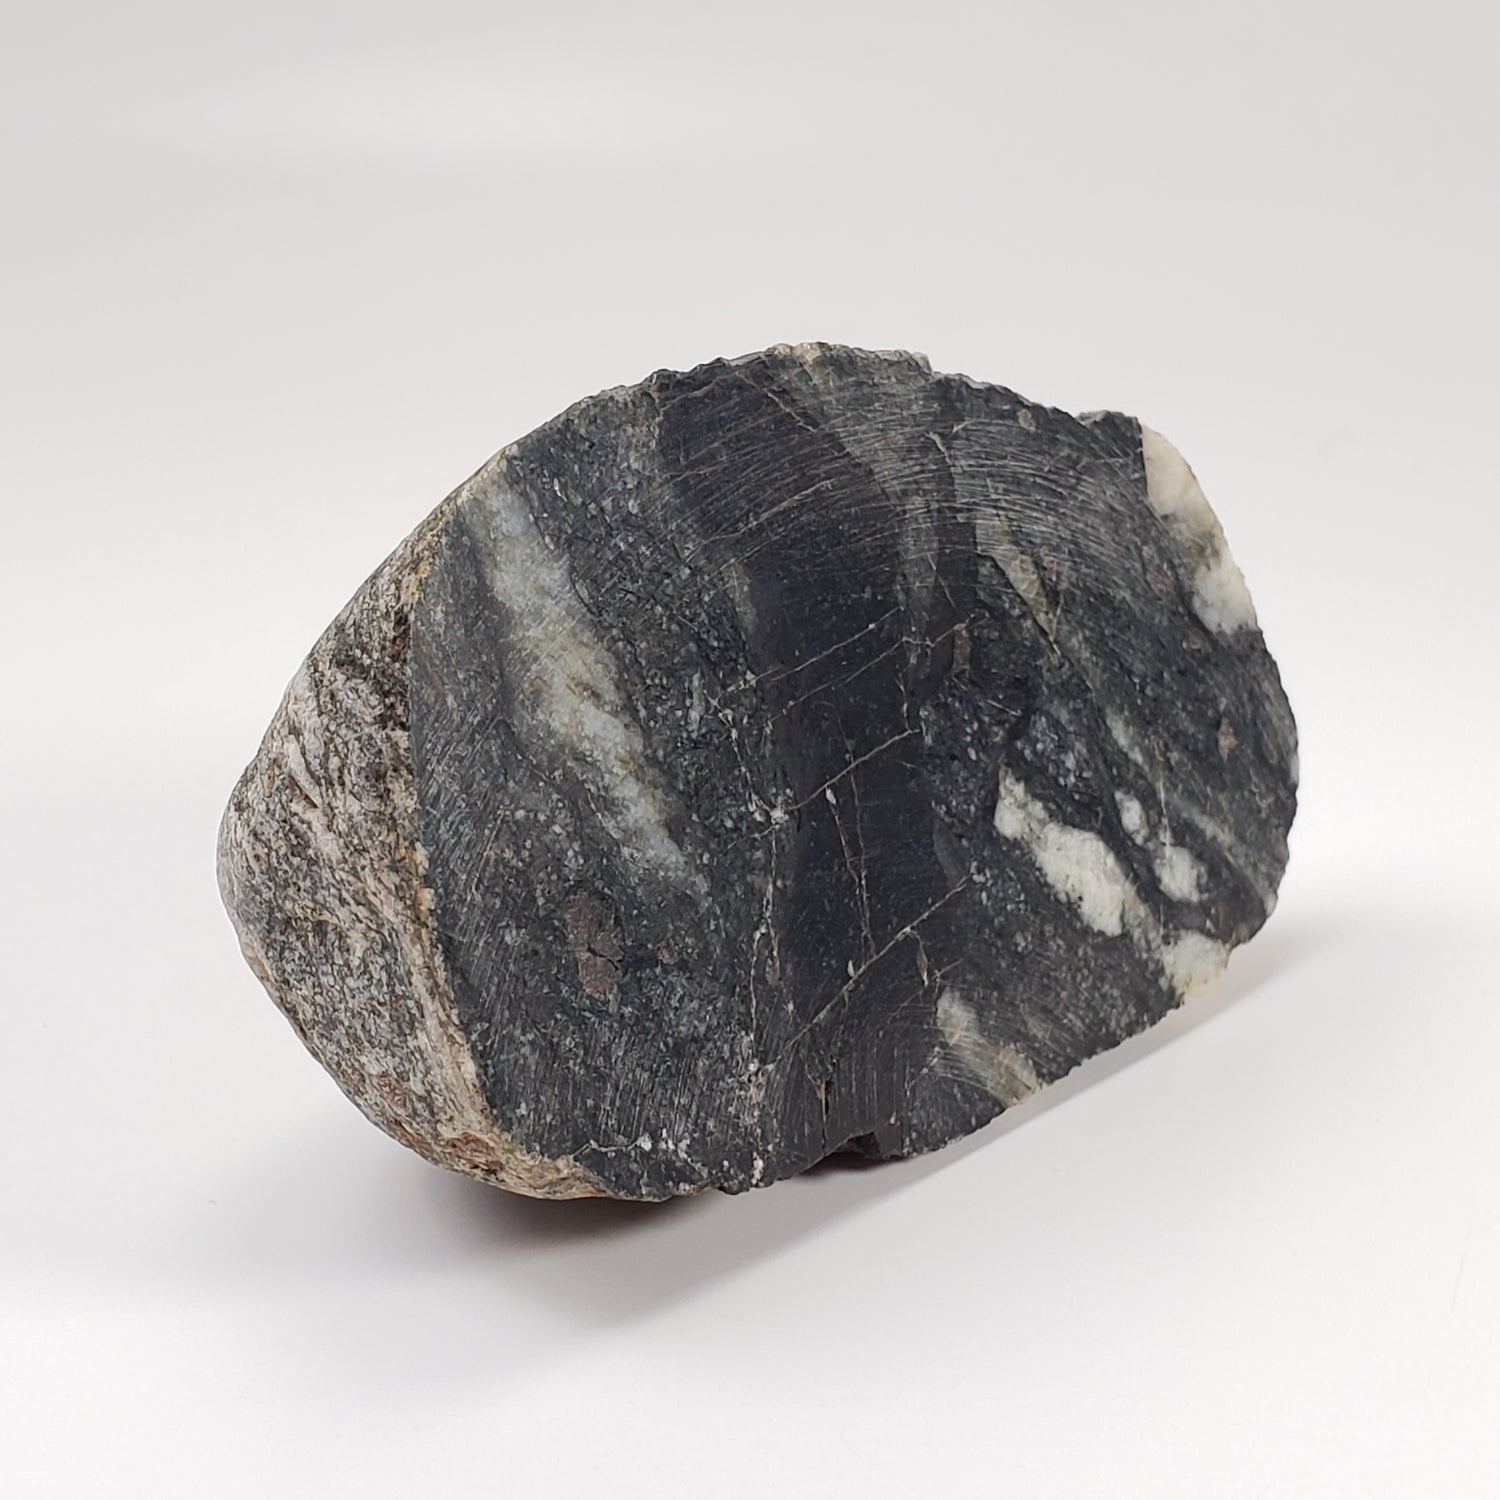 Dellenites Impact Melt Rock |  207.4 grams | HT Tagamite | Dellen Crater, Sweden